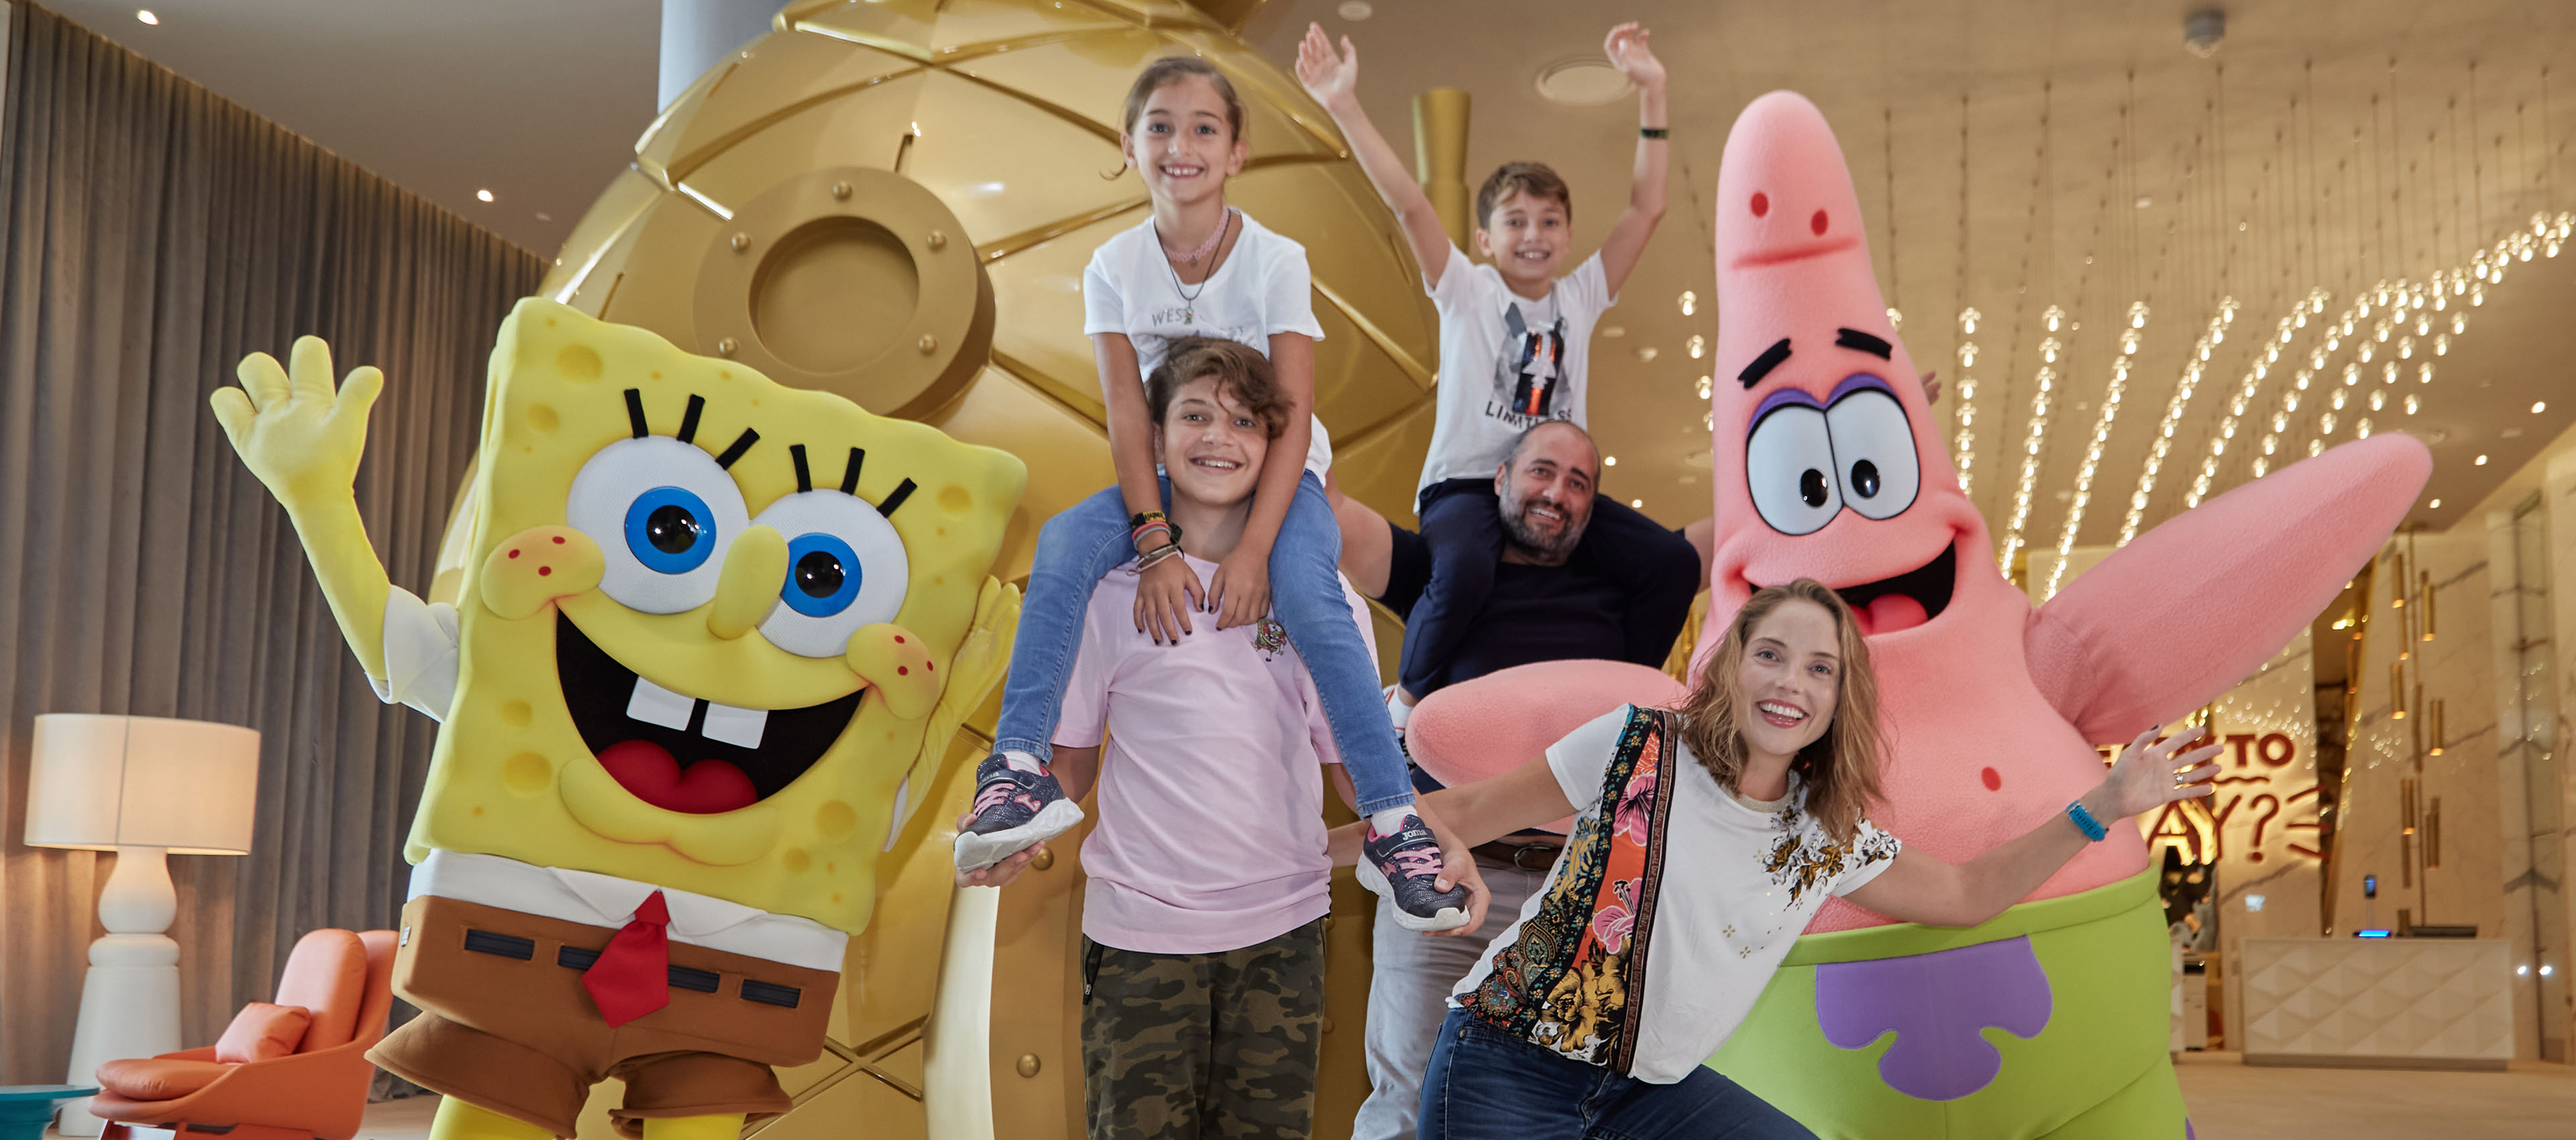 Nickelodeon - Nickelodeon added a new photo.